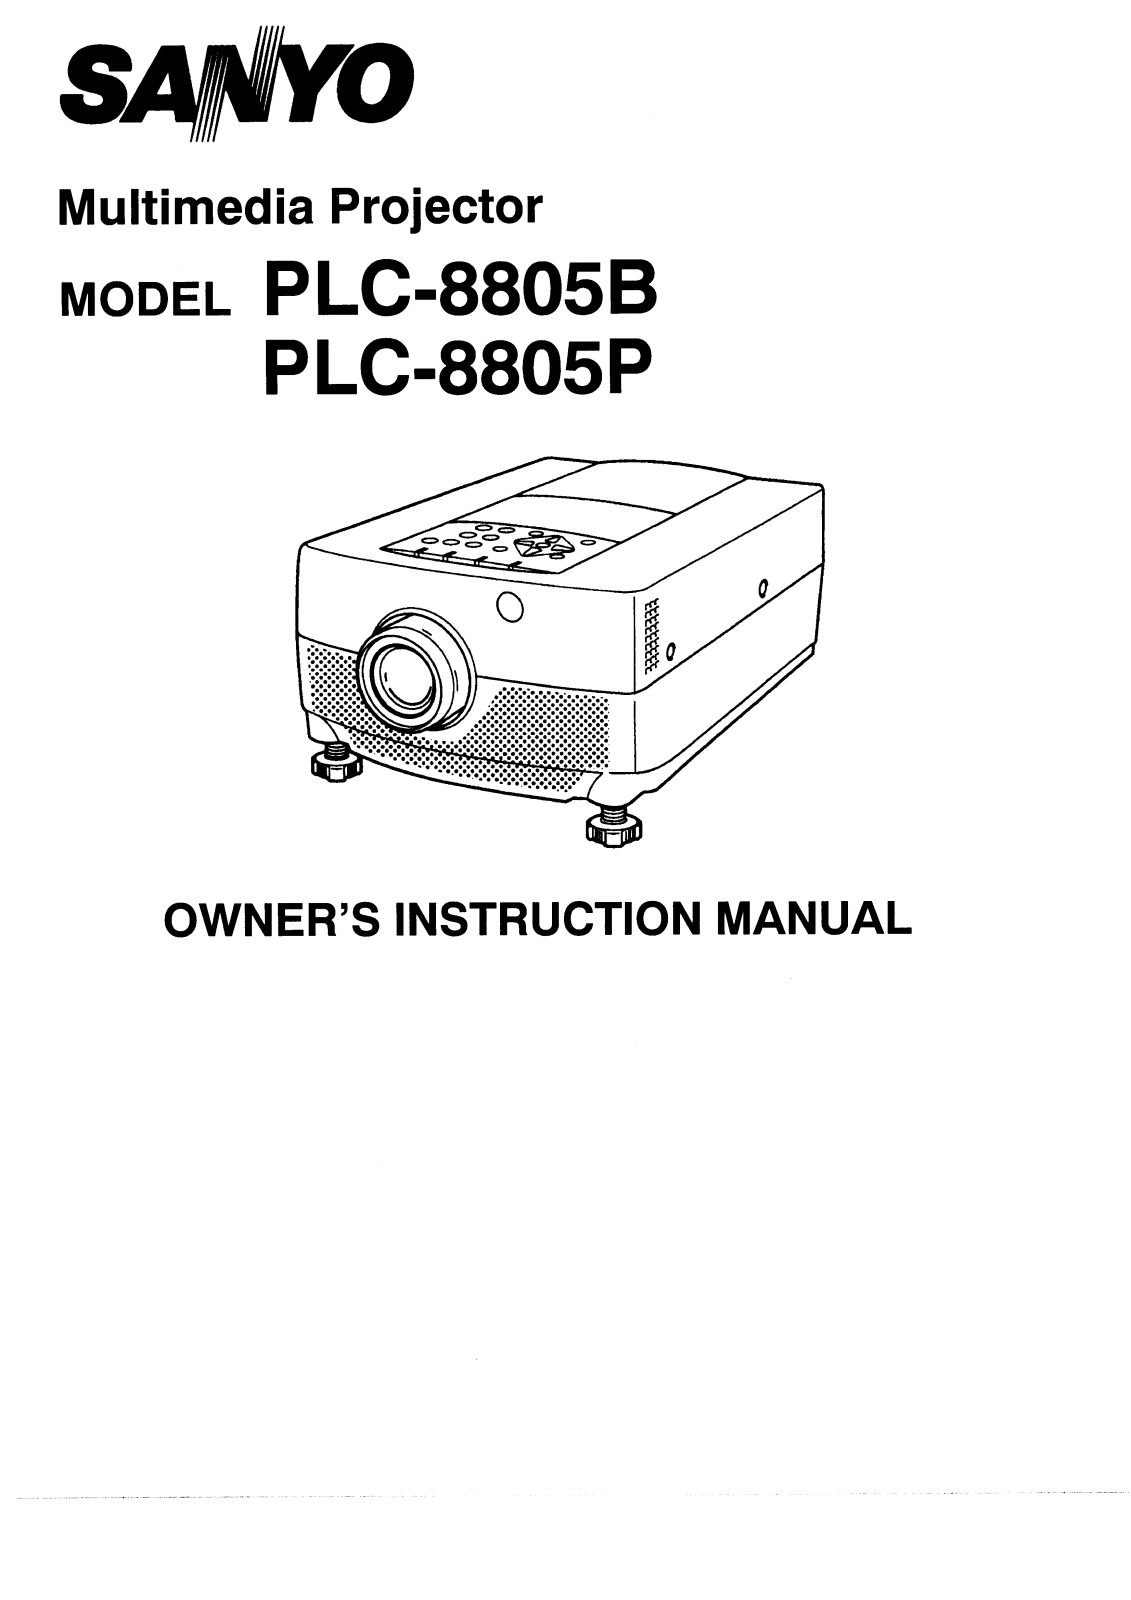 Sanyo PLC-8805B Instruction Manual